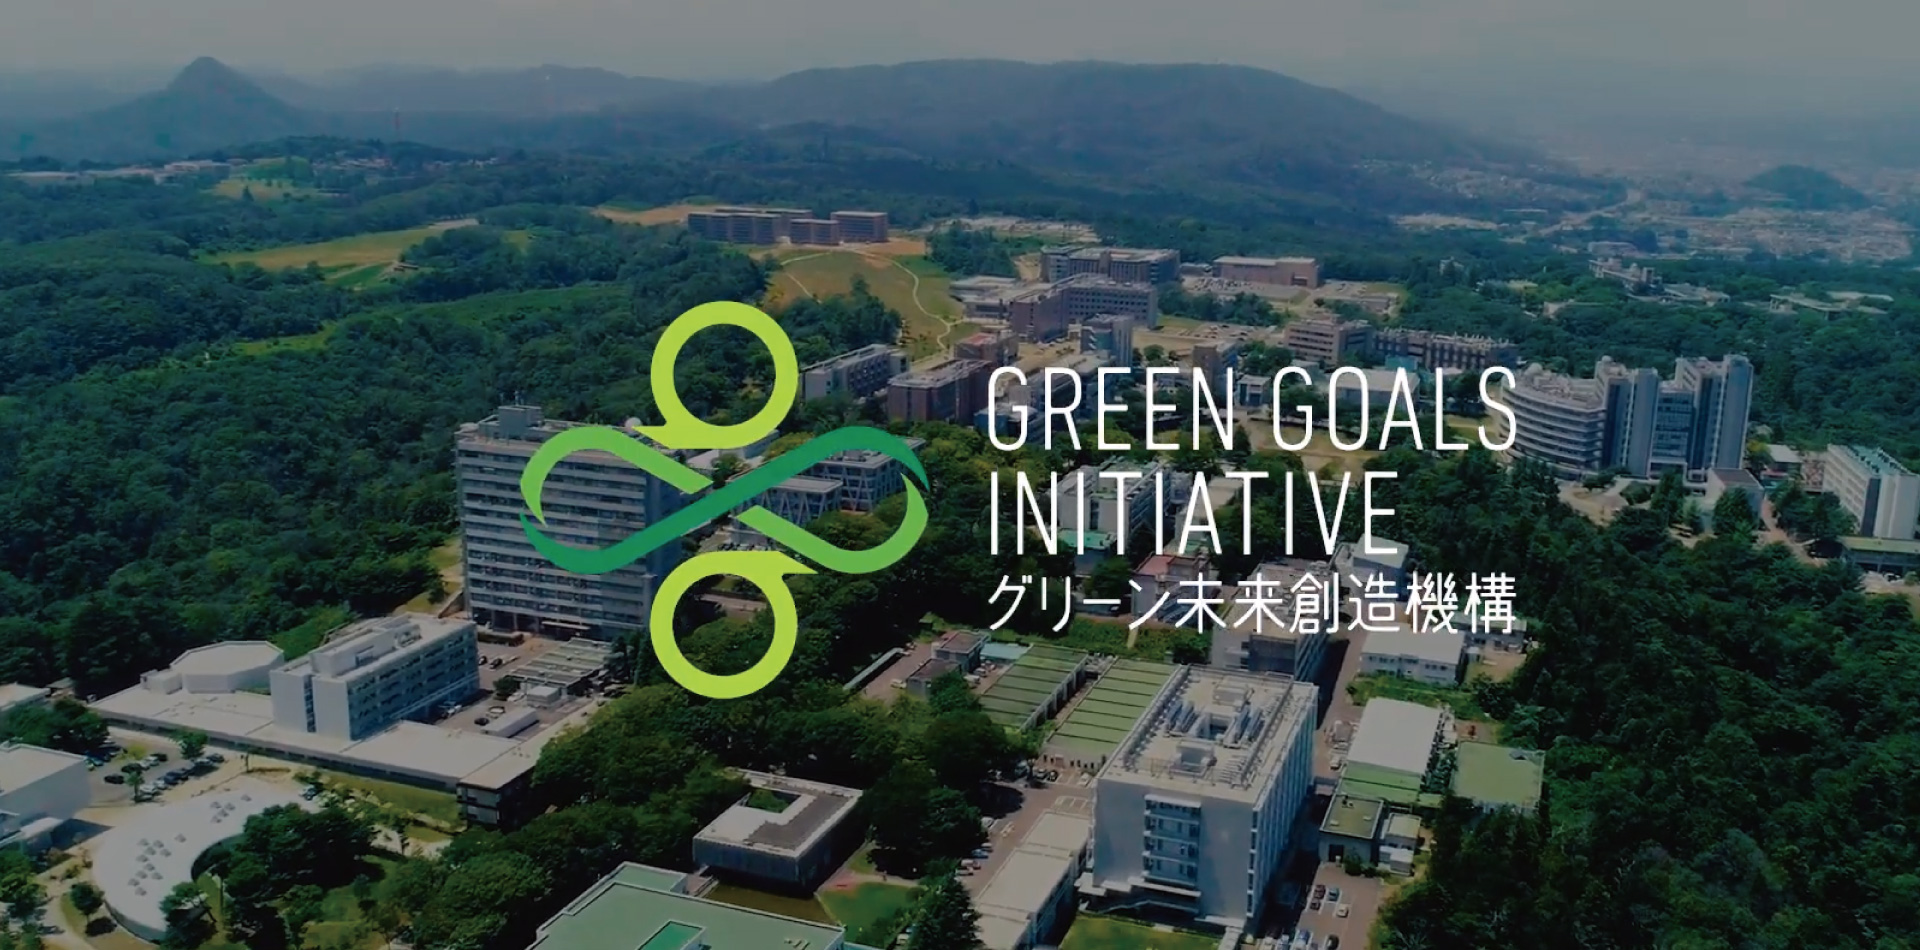 Tohoku University, Research Center for Green X-Tech